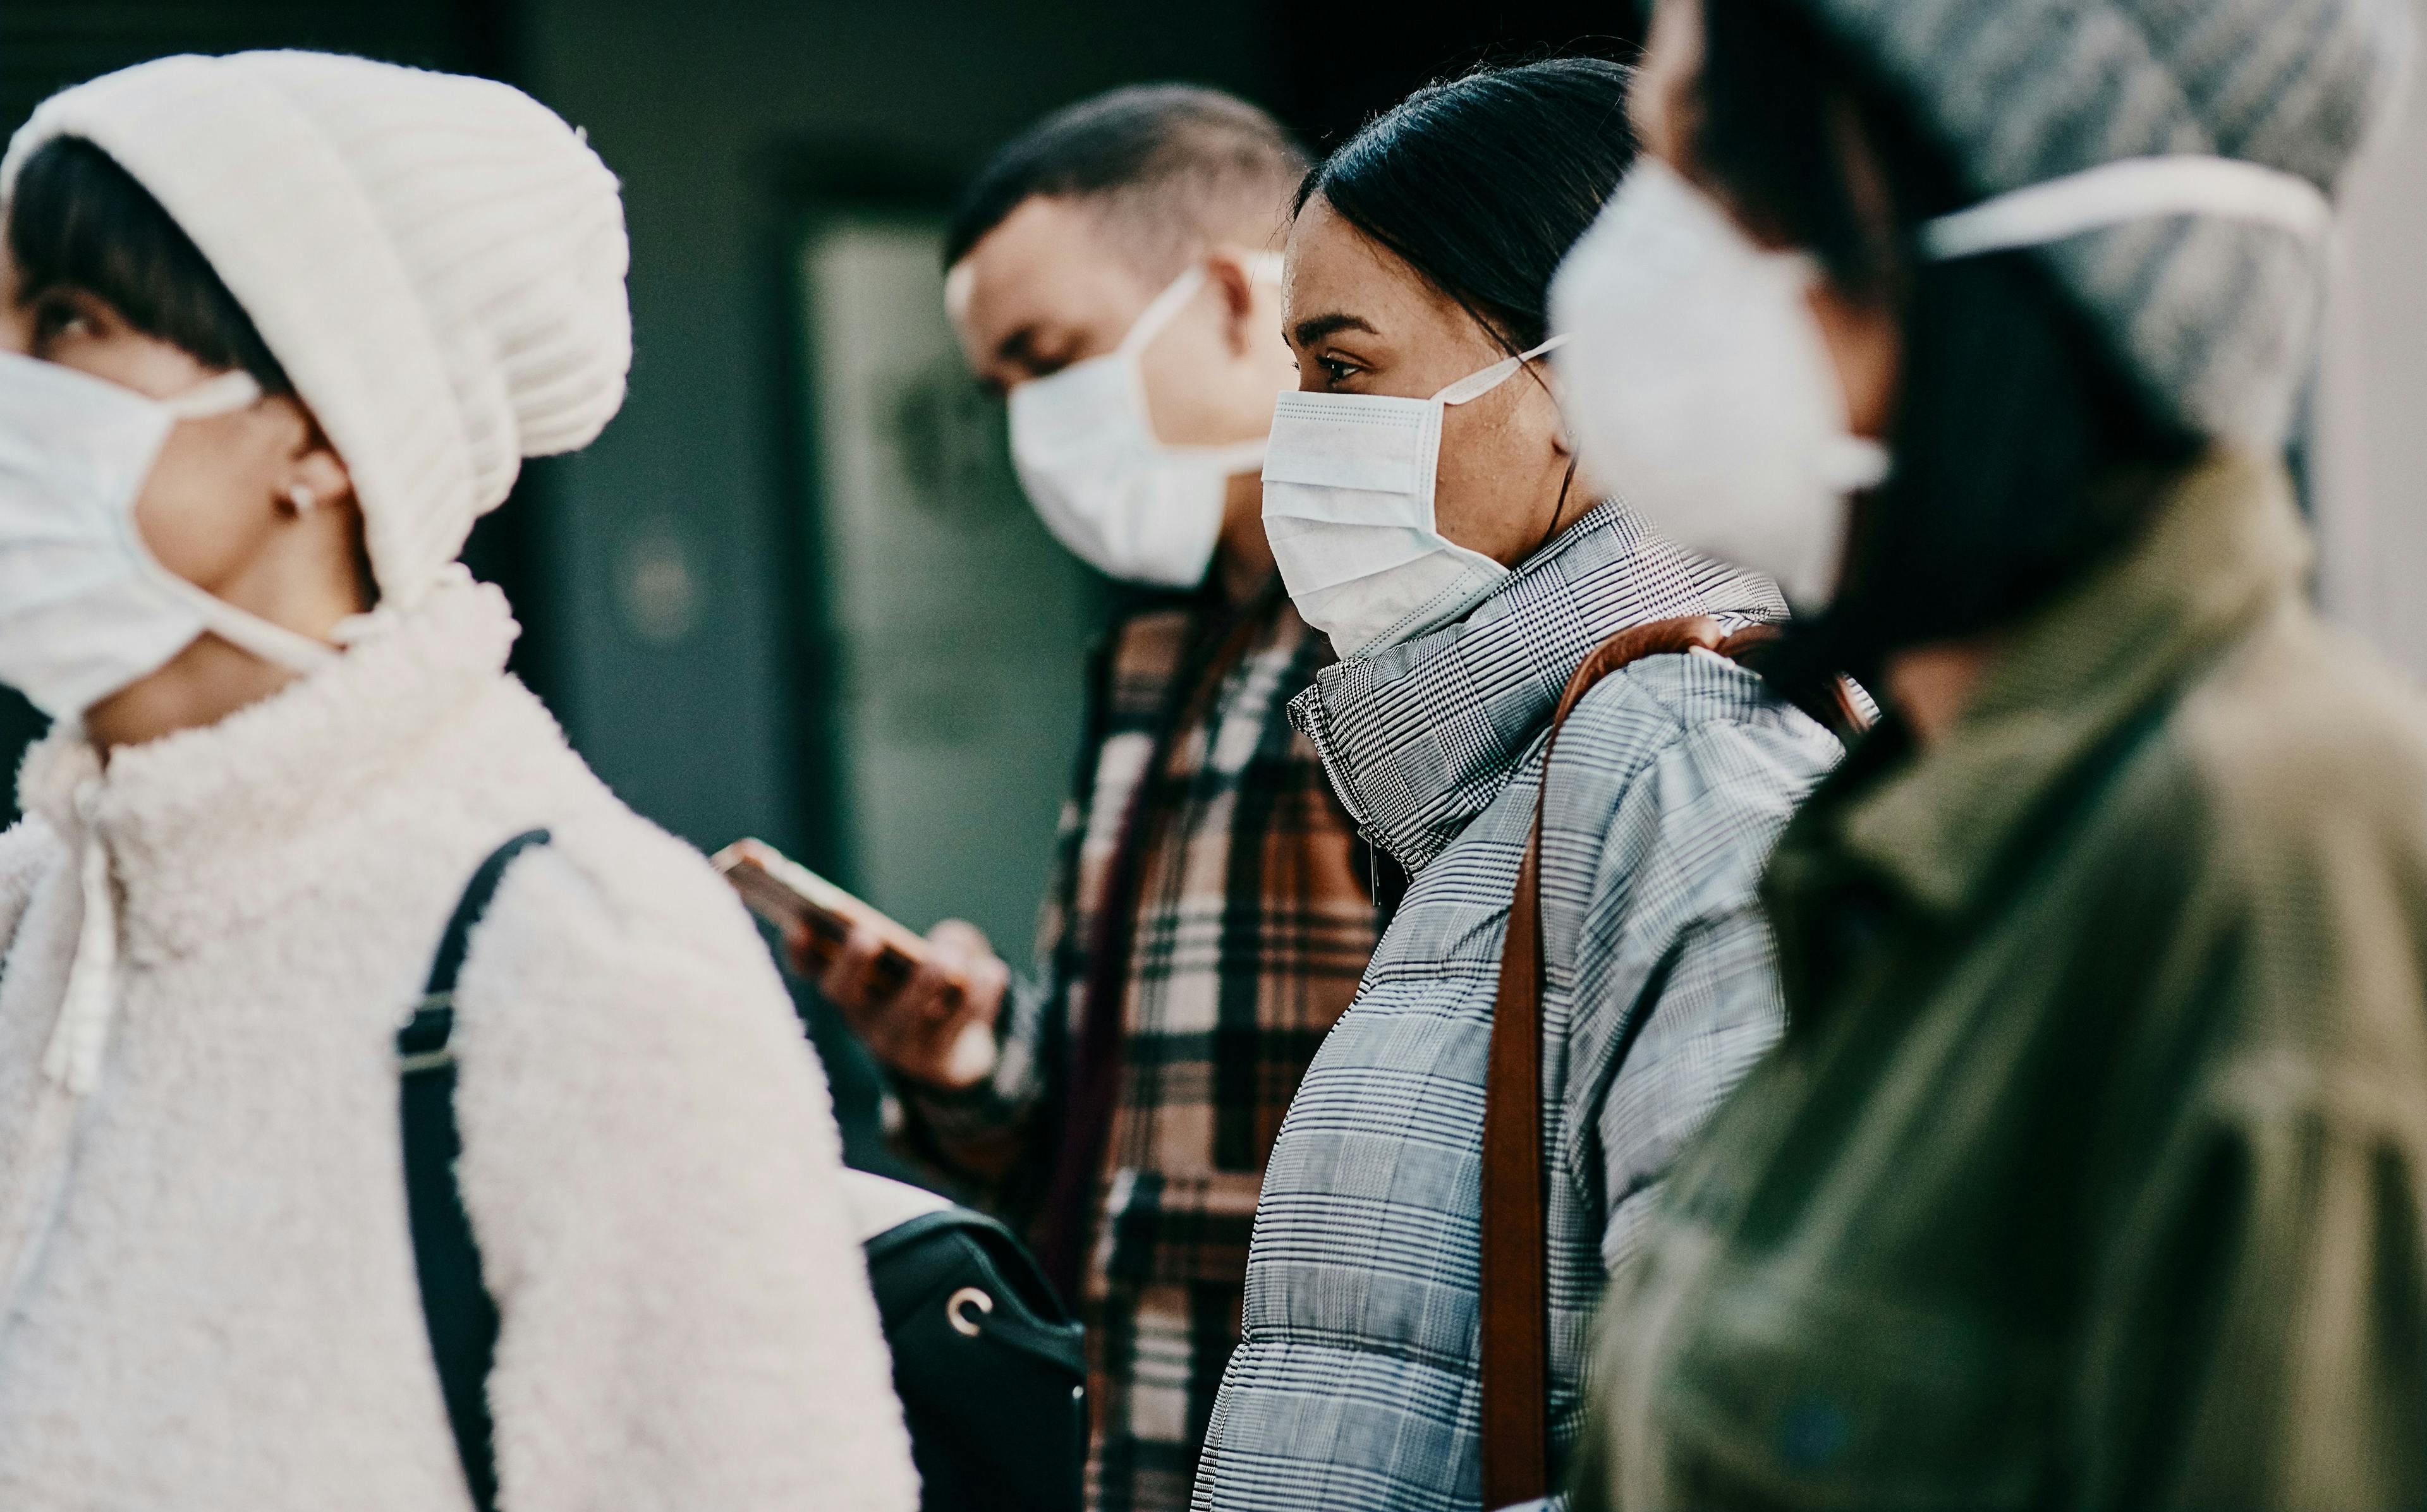 People wearing masks during COVID-19 pandemic / Nicholas Felix - stock.adobe.com